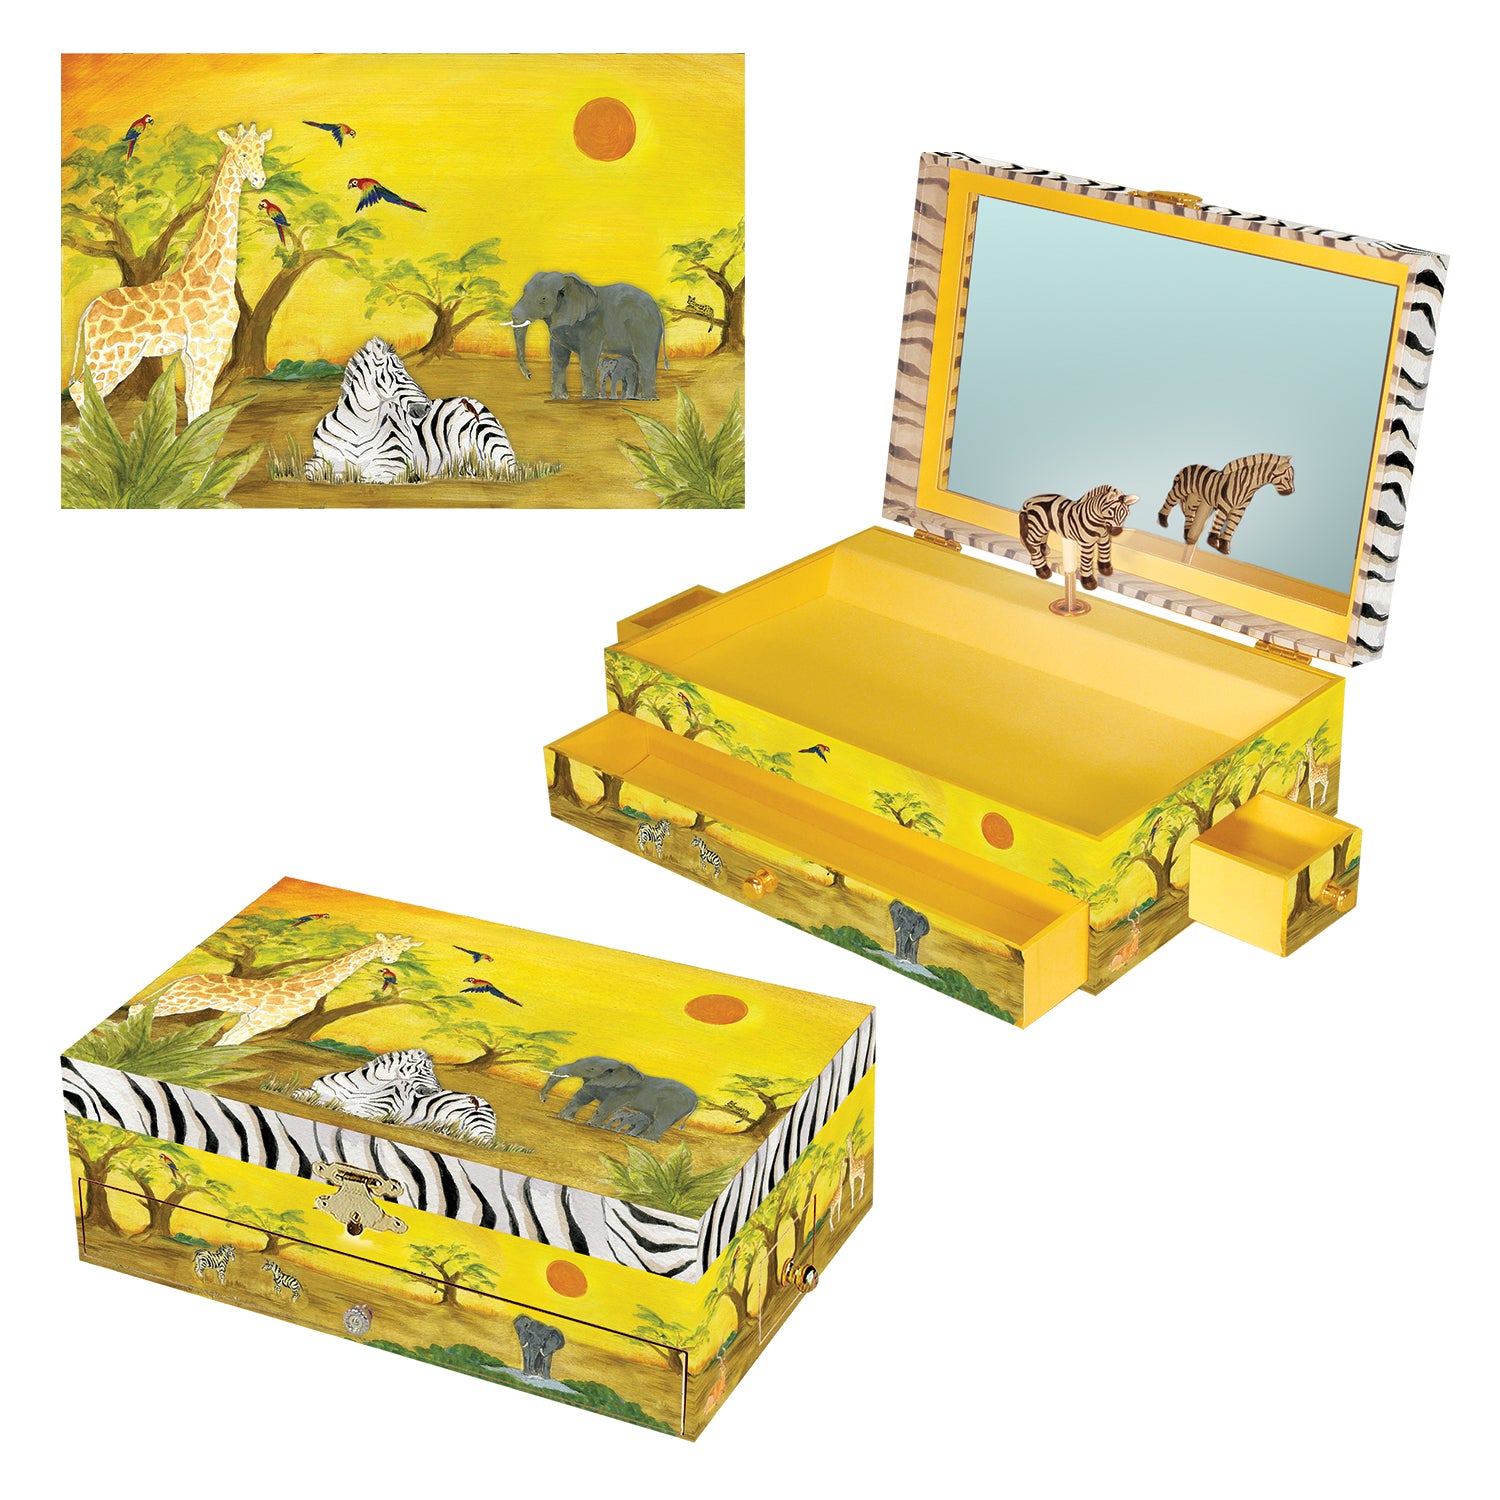 Joyero musical Zebra para niños: solución de almacenamiento encantadora y melodiosa